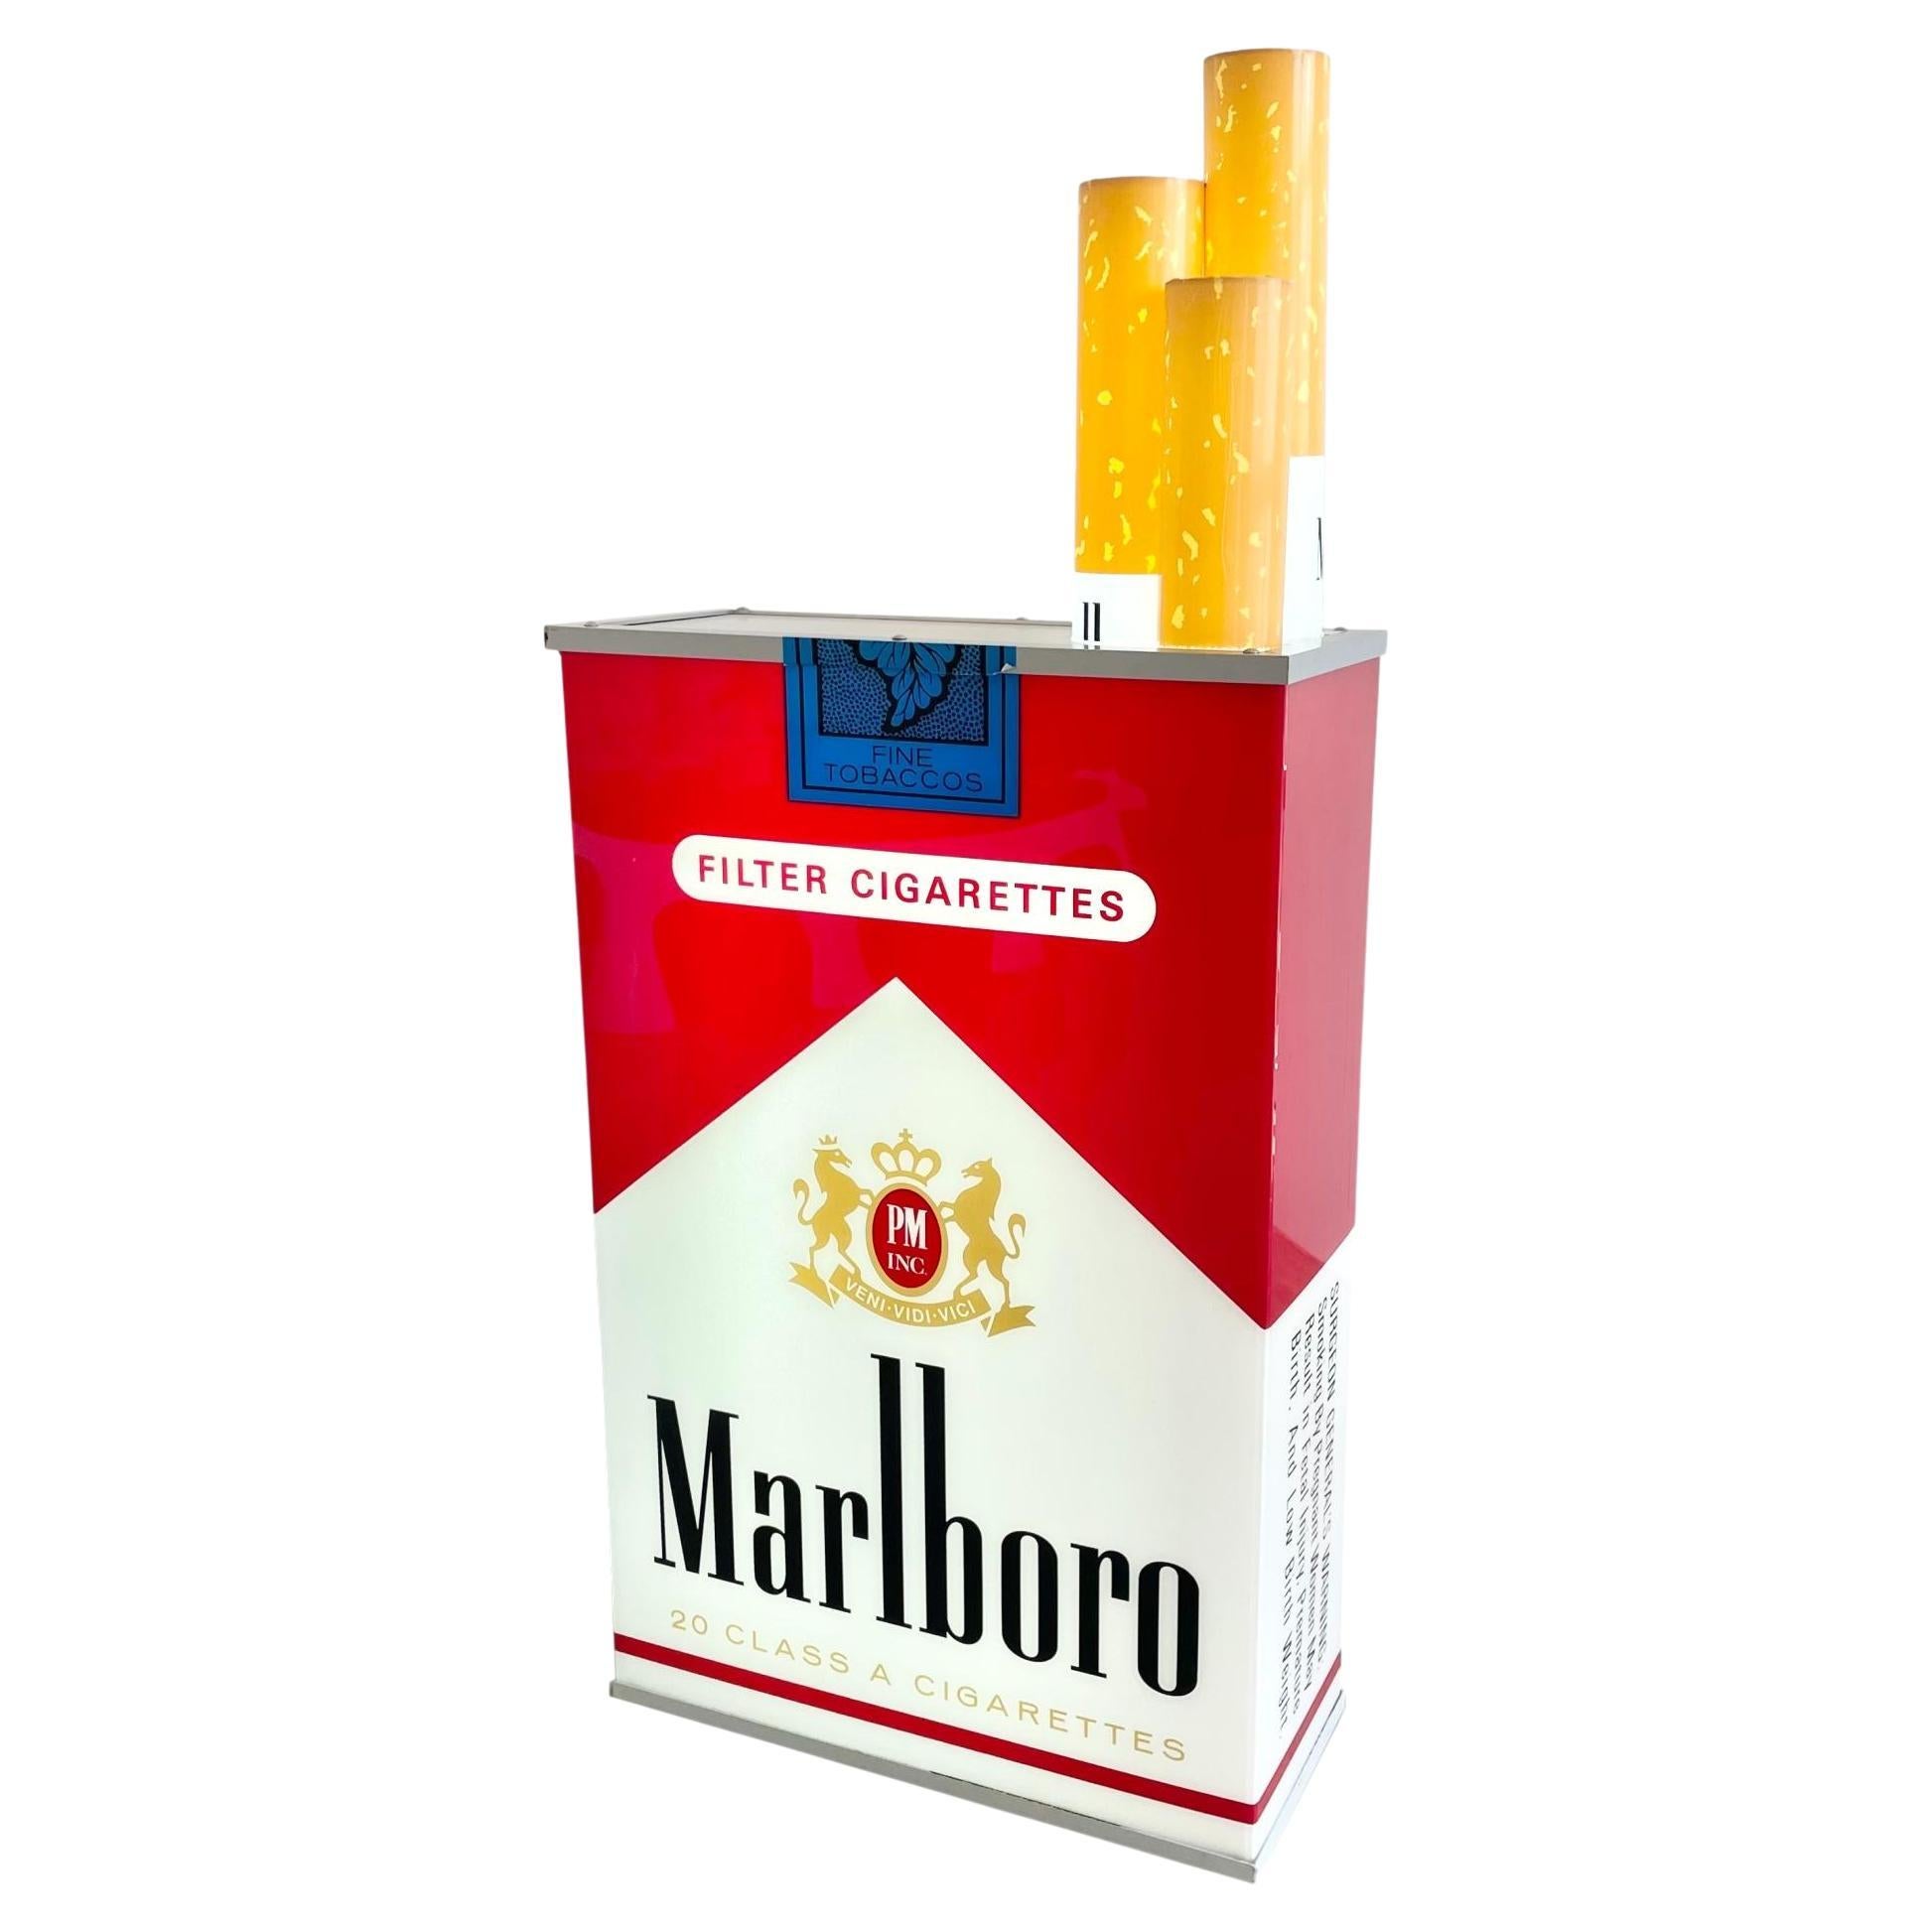 Massive Double Sided Vintage Marlboro Light Up Cigarette Pack